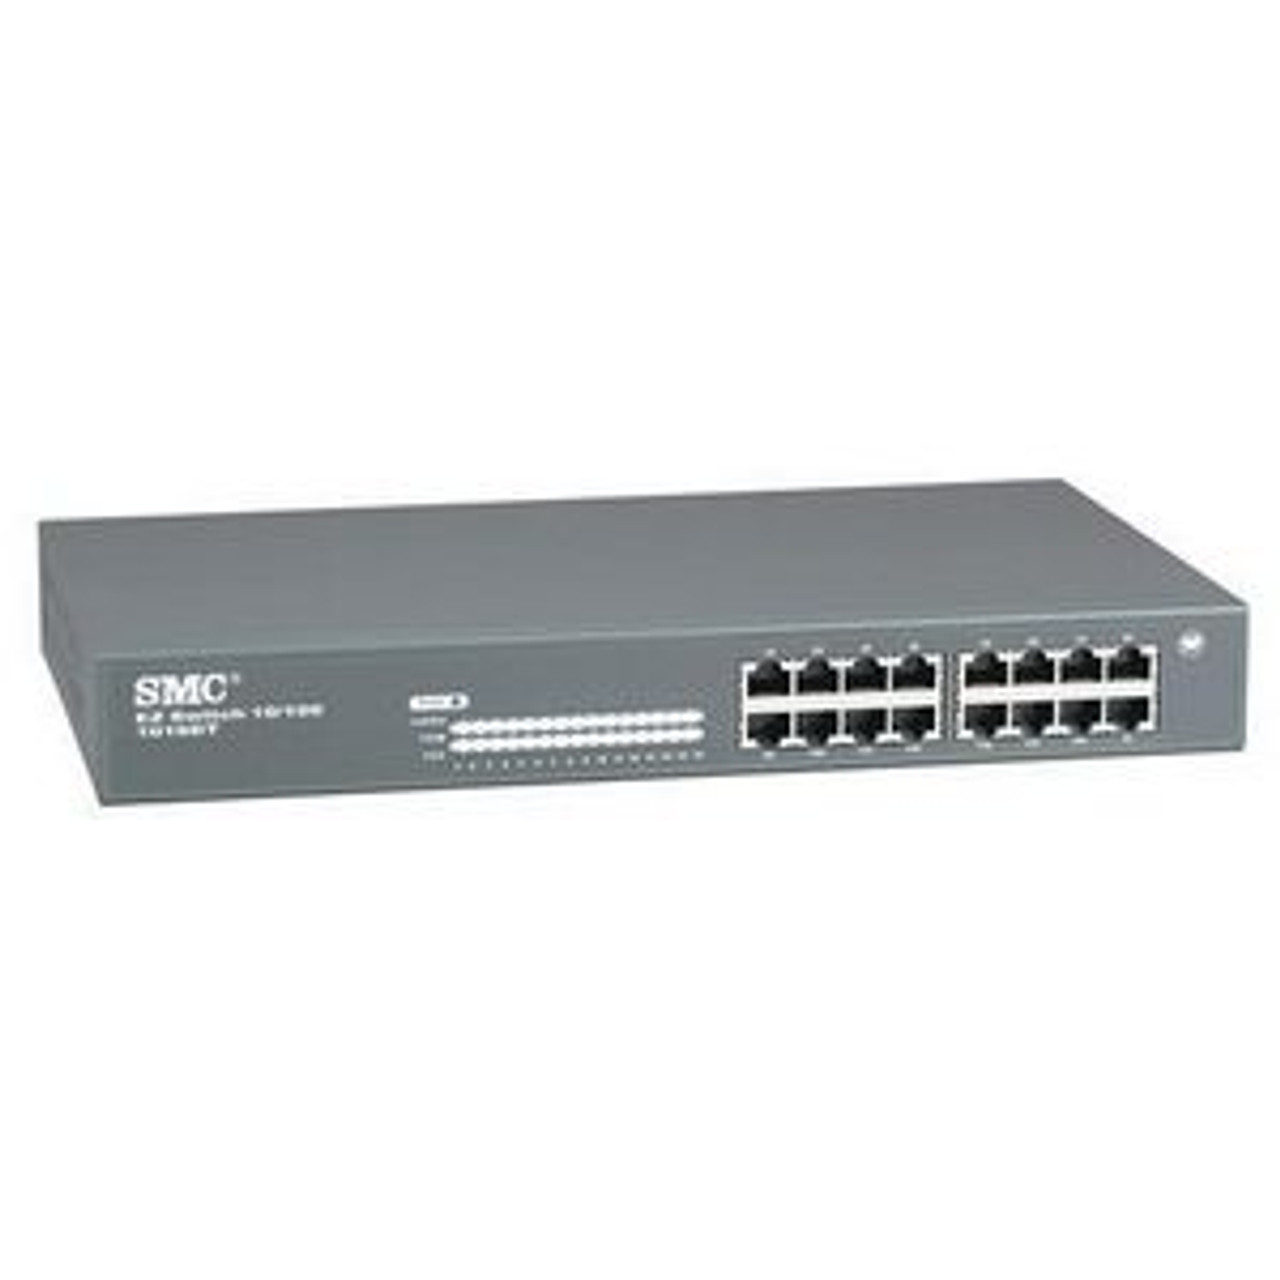 EZNET-16SW SMC Networks EZ Ethernet Switch 15 1 x 10/100Base-TX RJ-45 10/100Base-TX Rack Mountable (Refurbished)